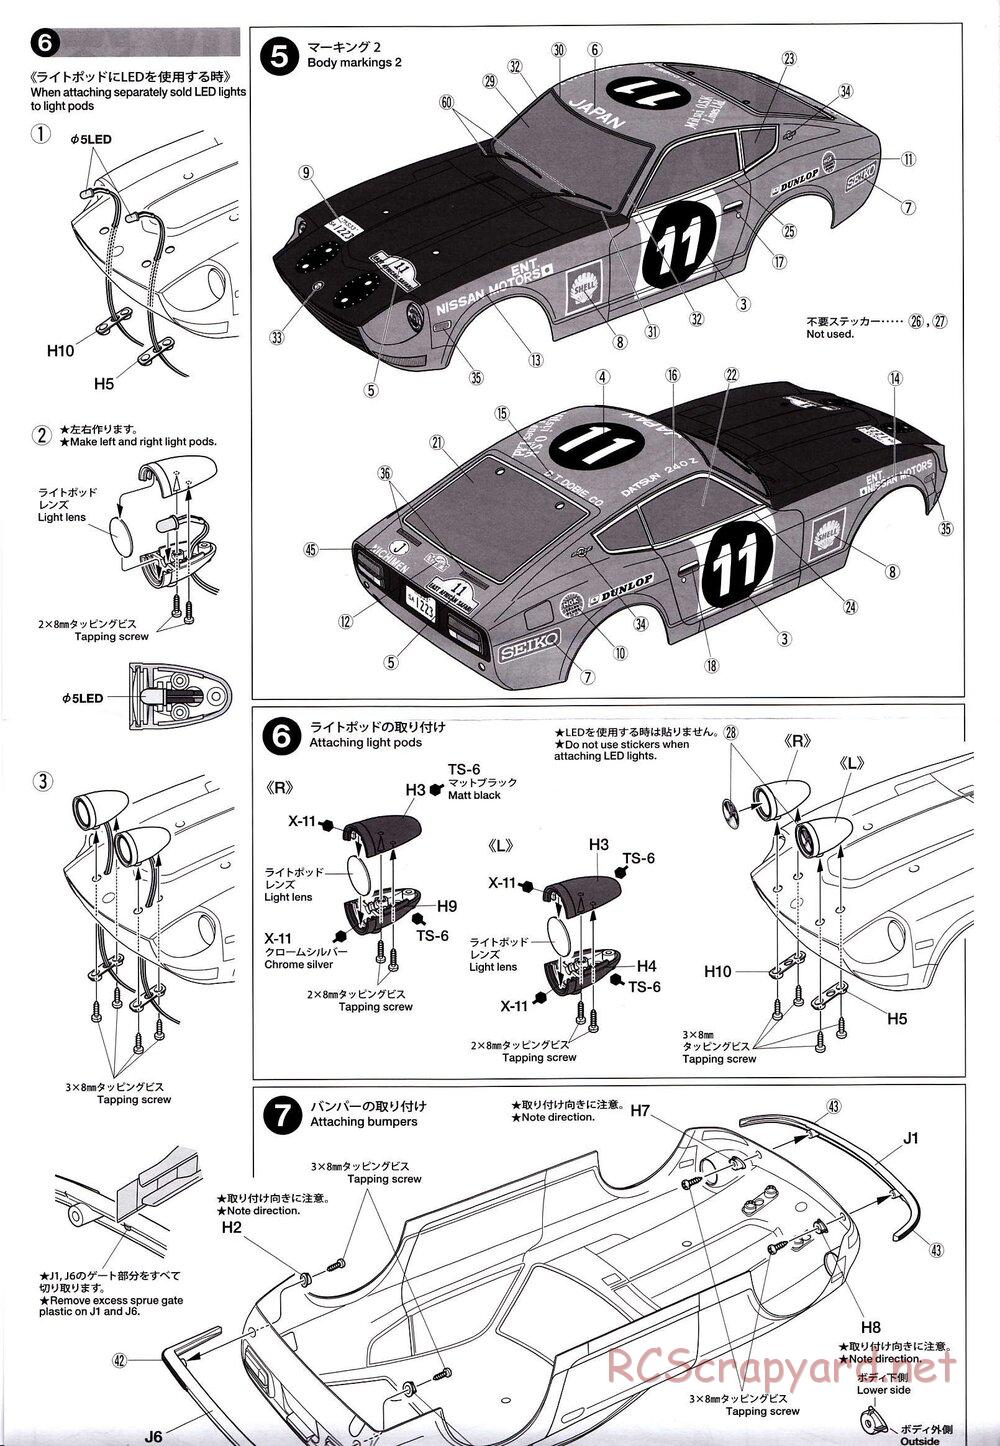 Tamiya - Datsun 240Z Rally Version - DF-03Ra Chassis - Body Manual - Page 3